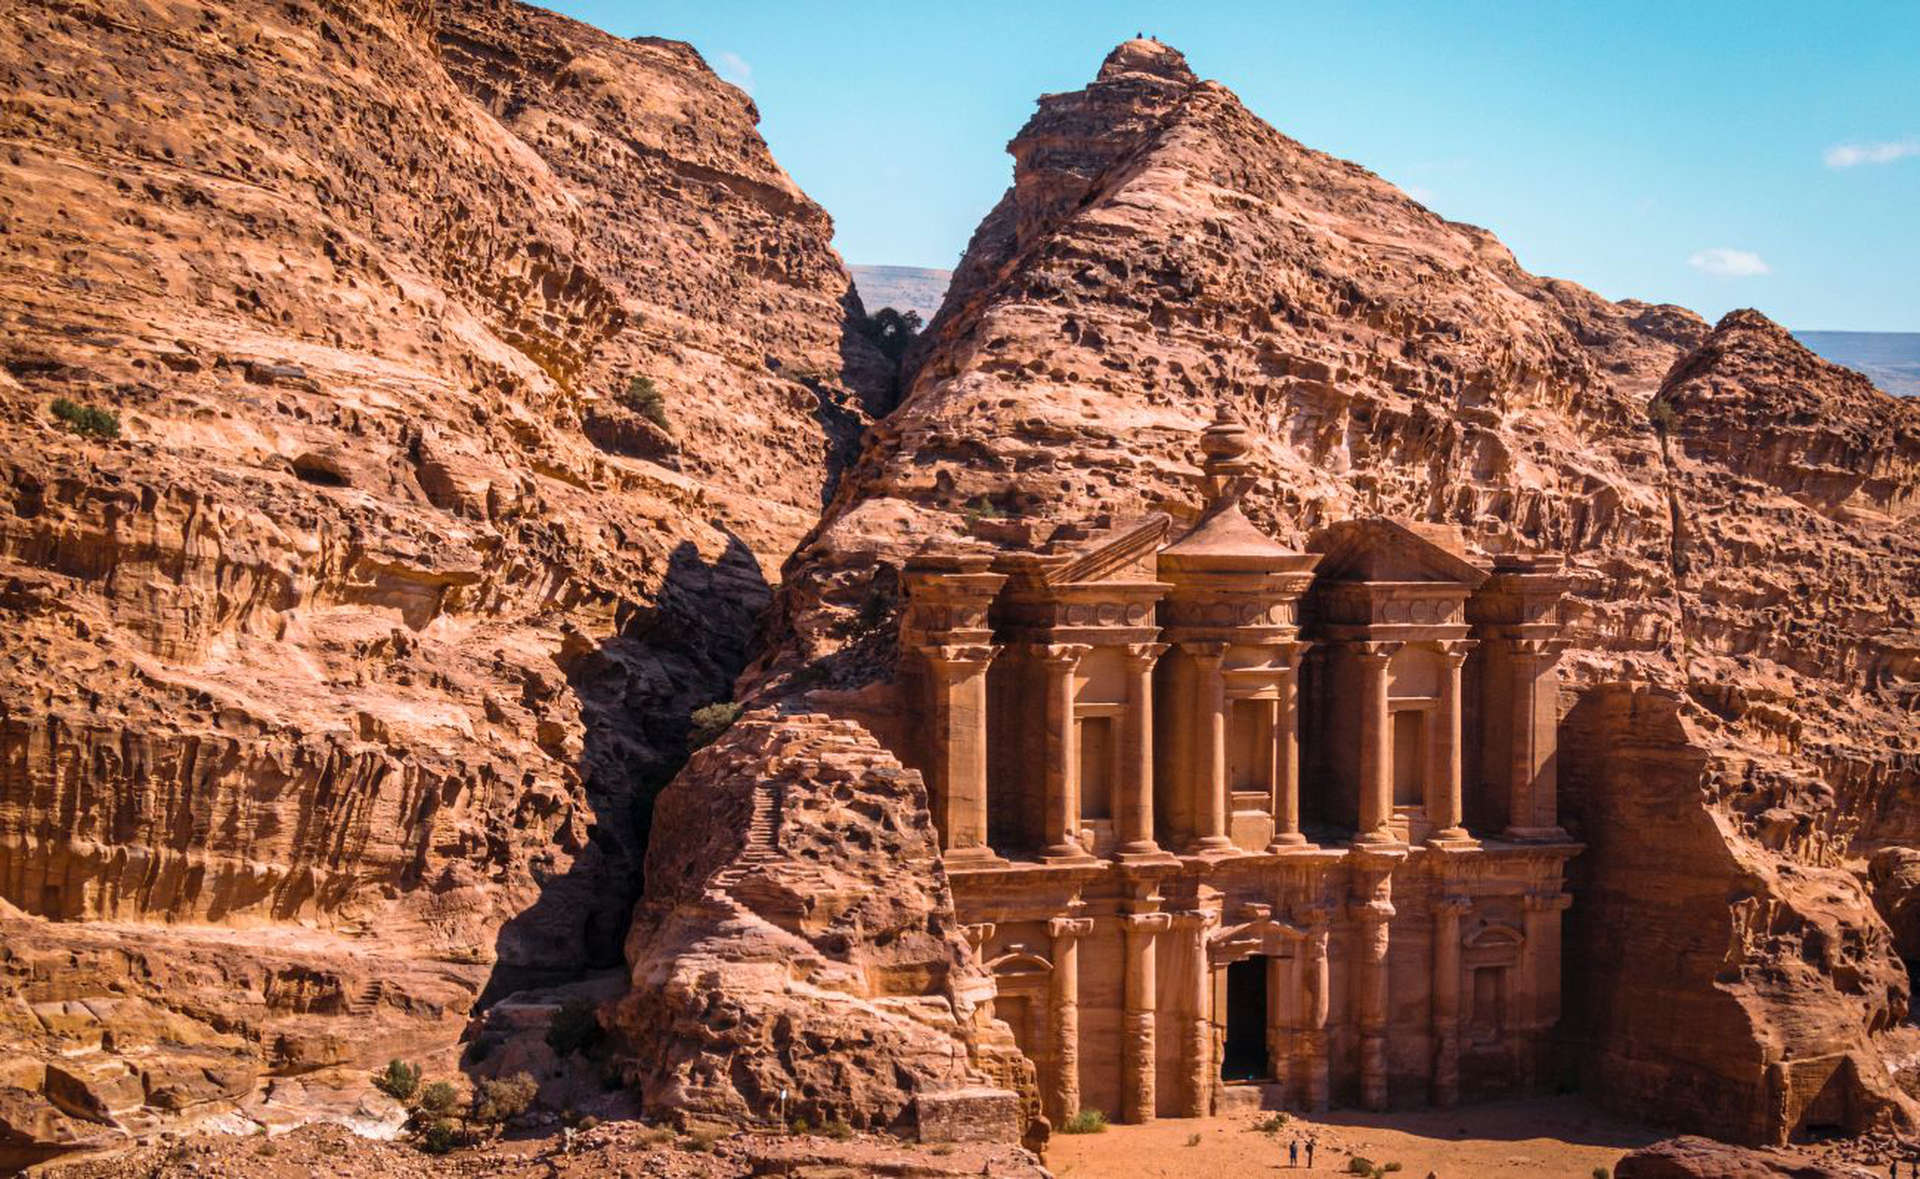 Petra, a famous archaeological site in Jordan's southwestern desert